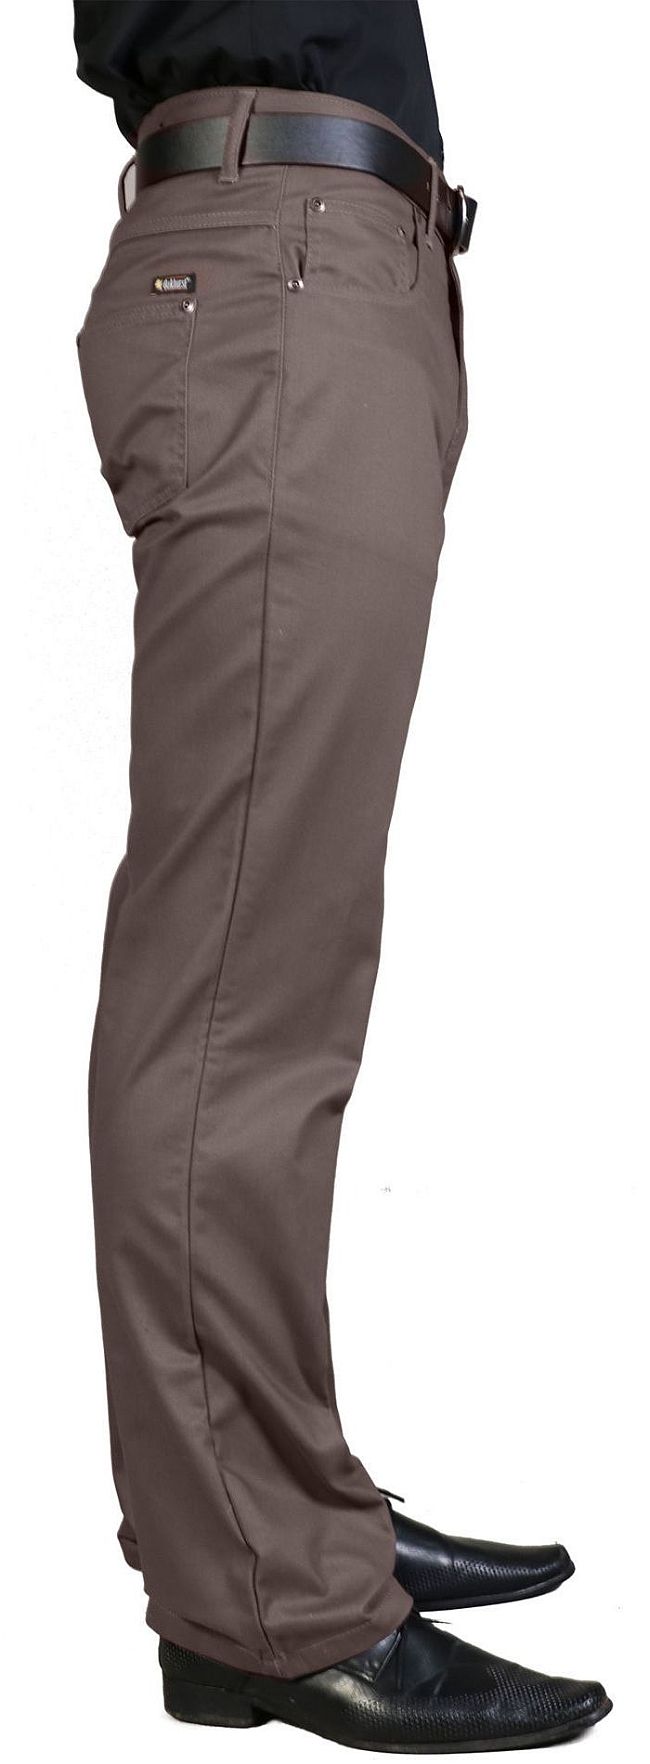 Oakhurst 5 Pocket Chinos long pants Paratrooper Shop